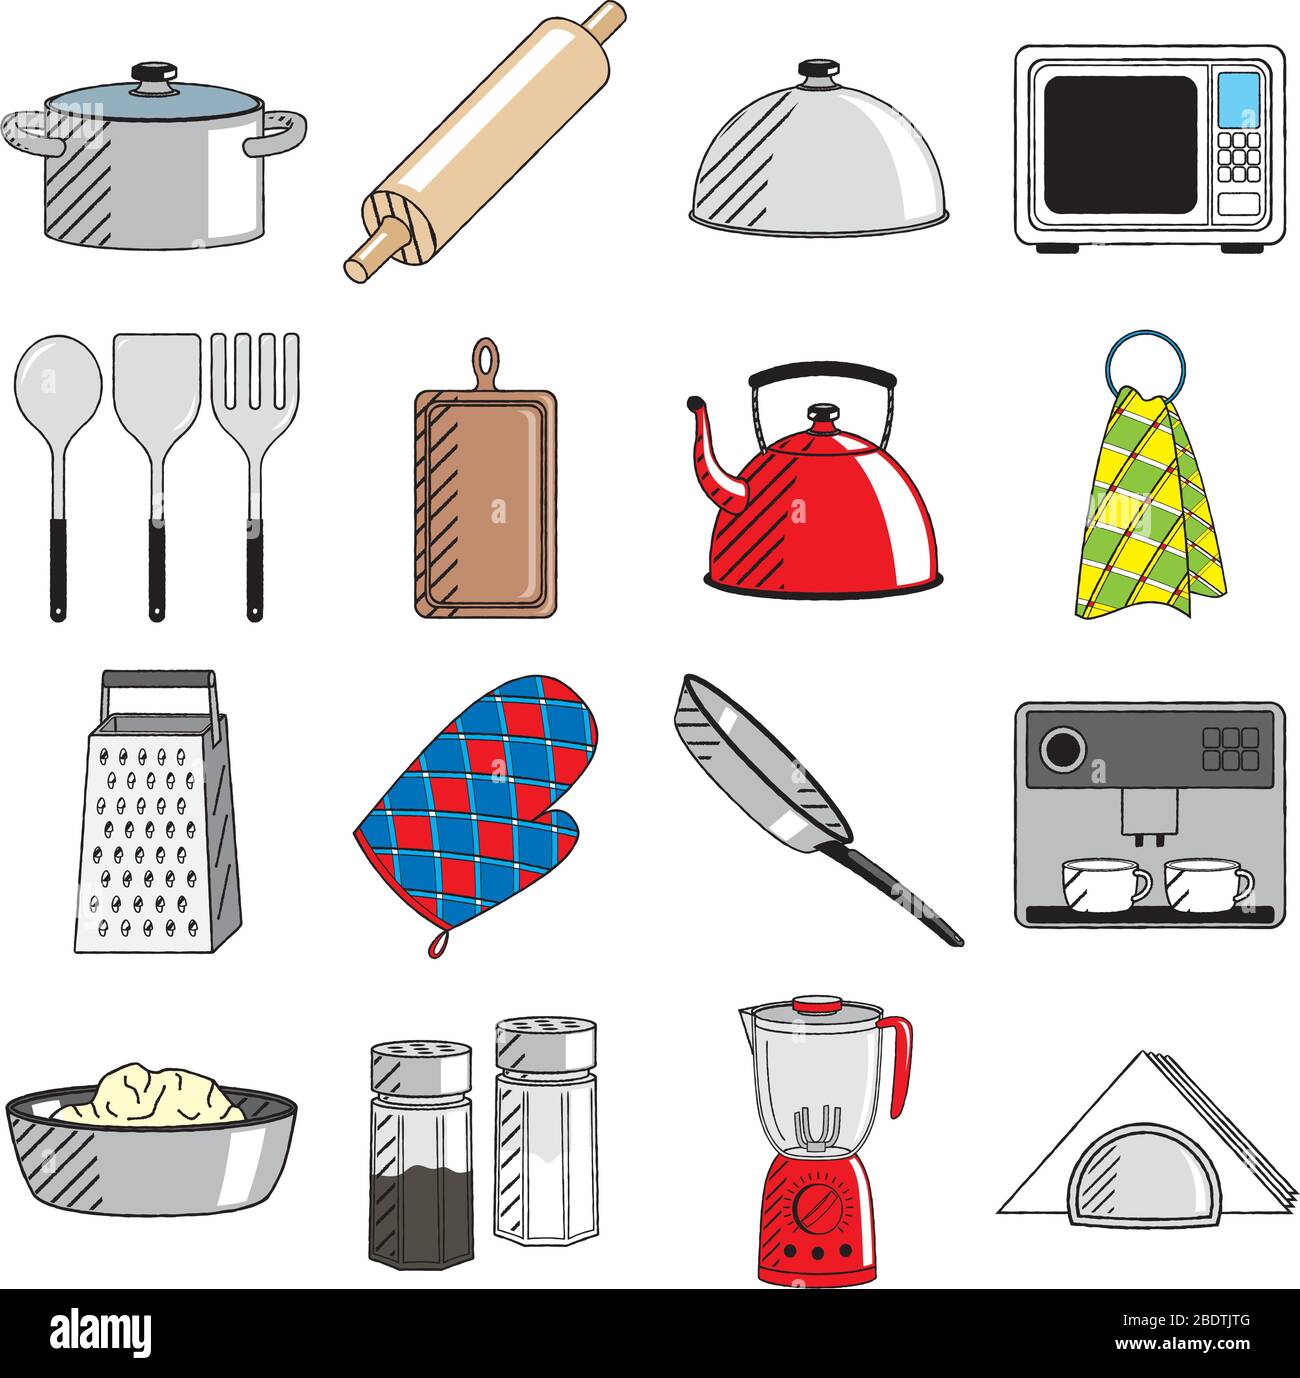 Küchengeräte (Set) - Cliparts/ Illustrationen Stock-Vektorgrafik - Alamy